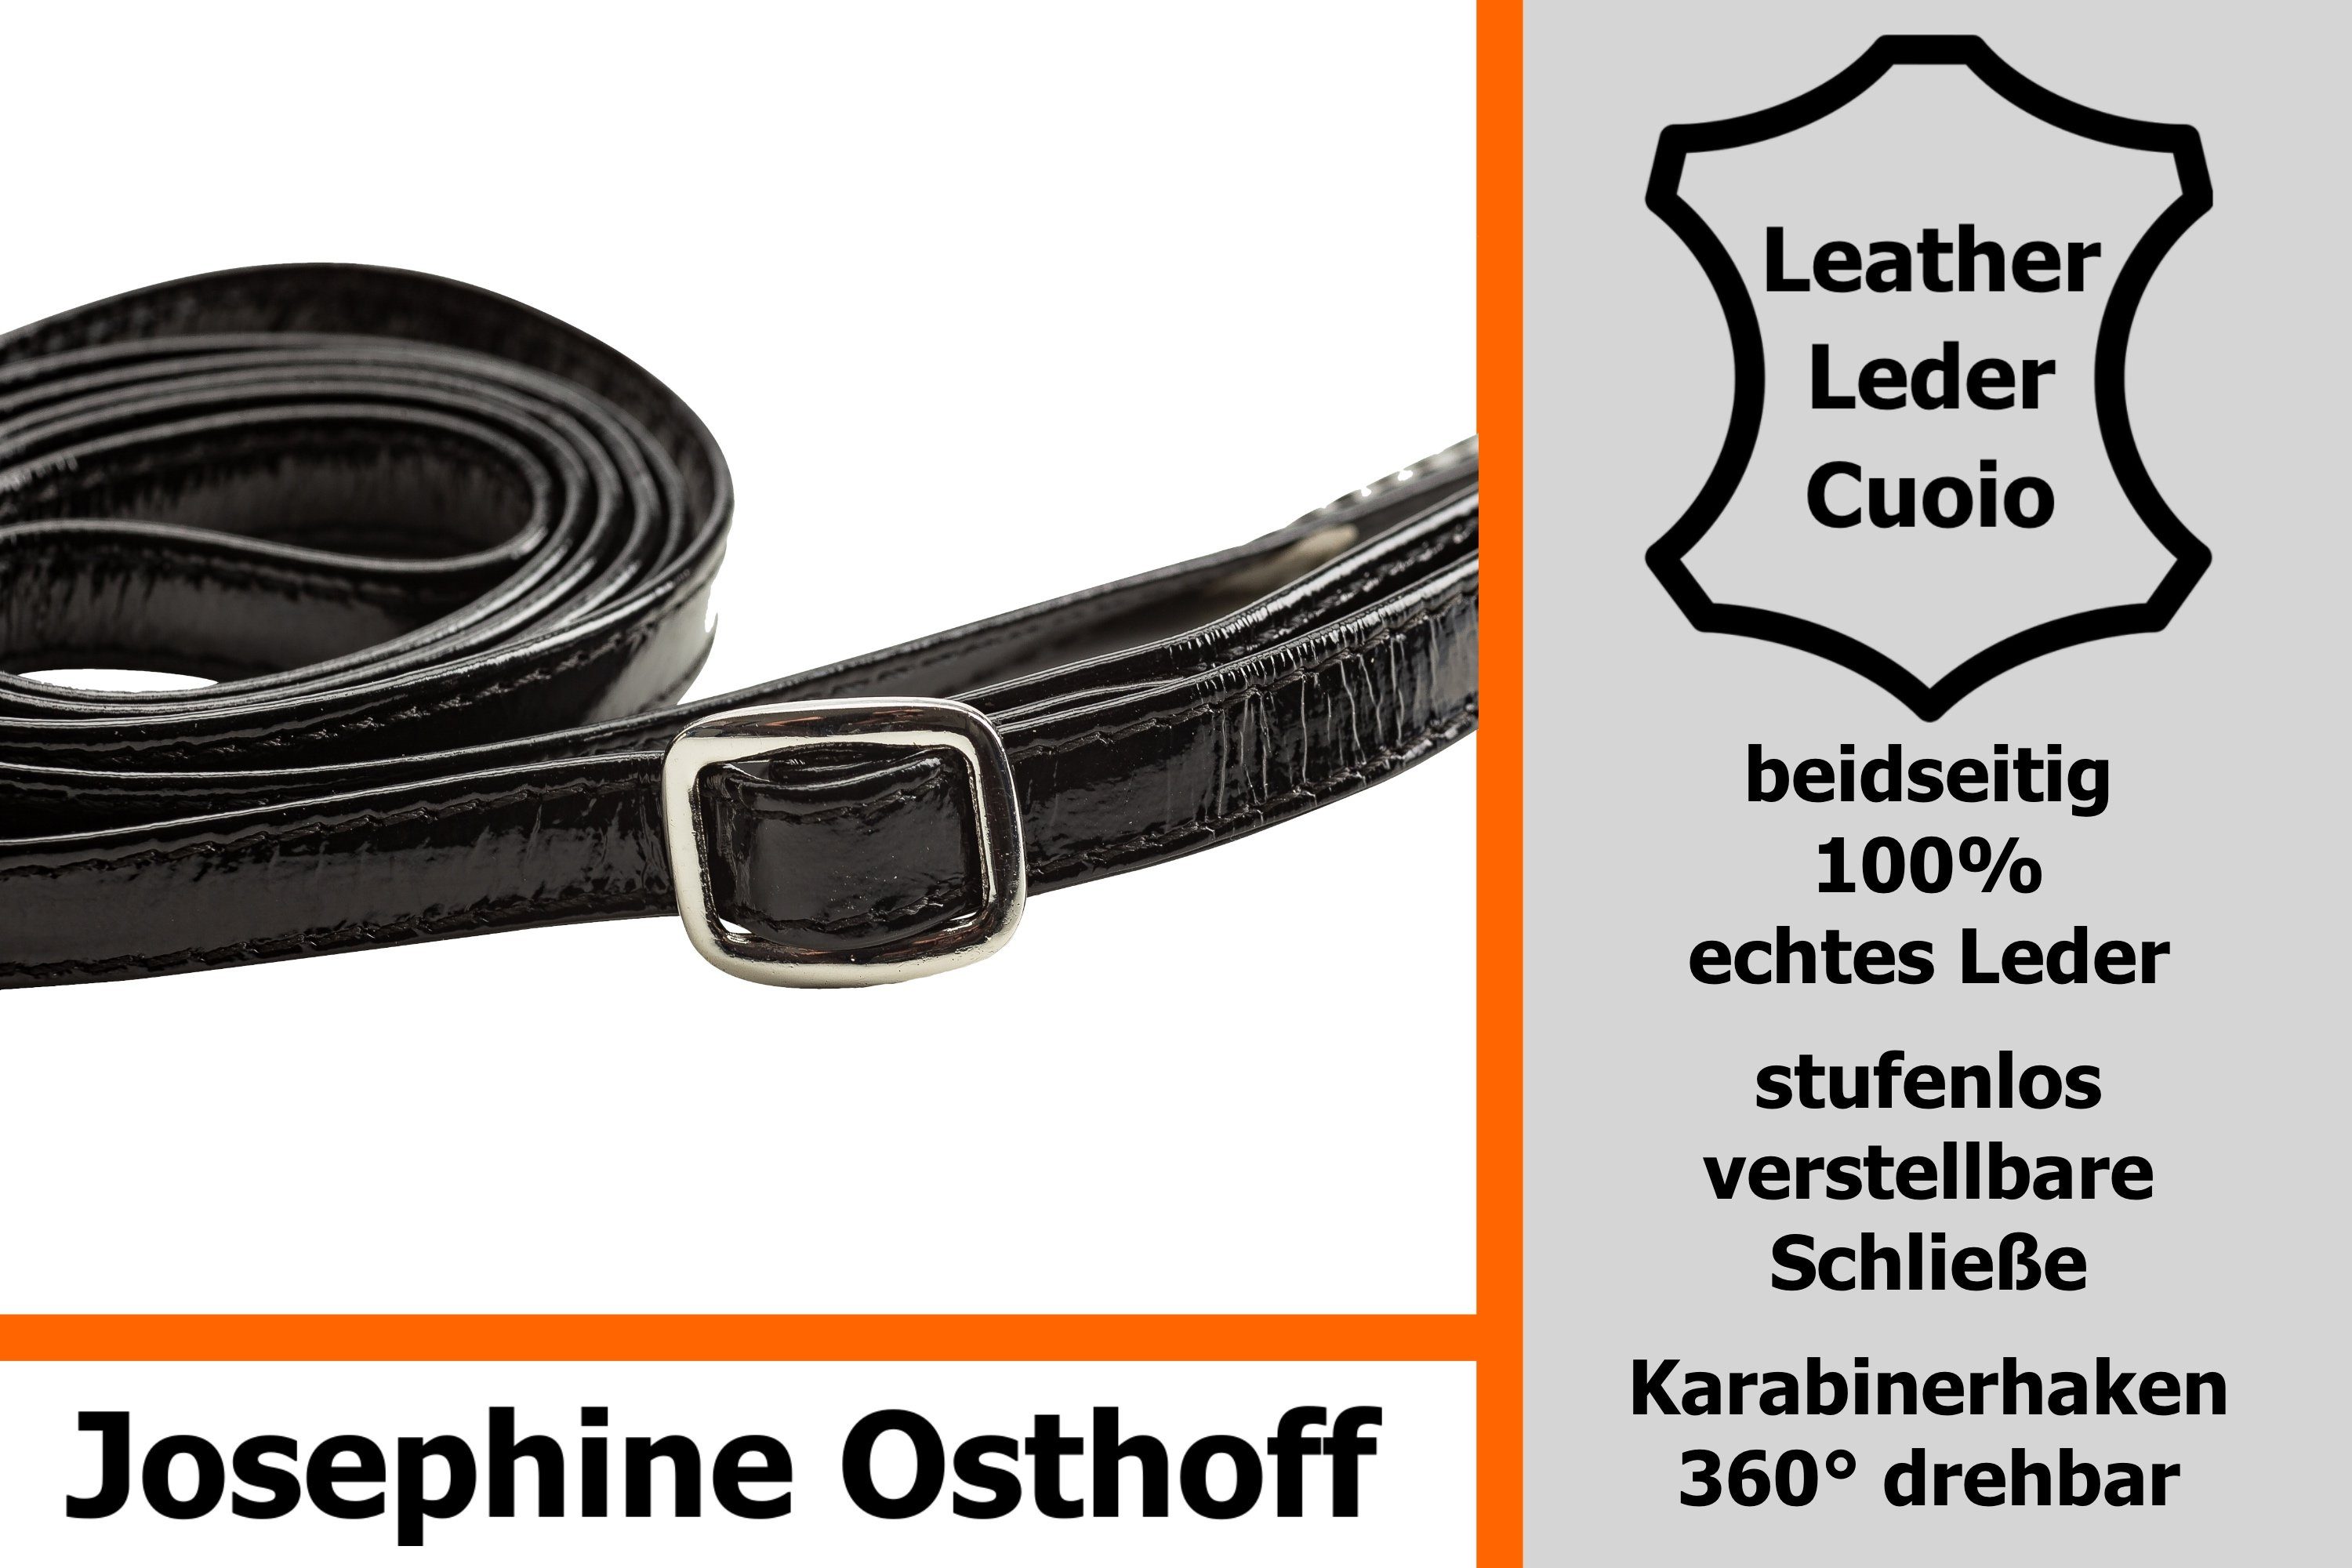 Josephine Osthoff Schulterriemen Lack Lack-Schwarz/Silber cm Schulterriemen schwarz/silber 1